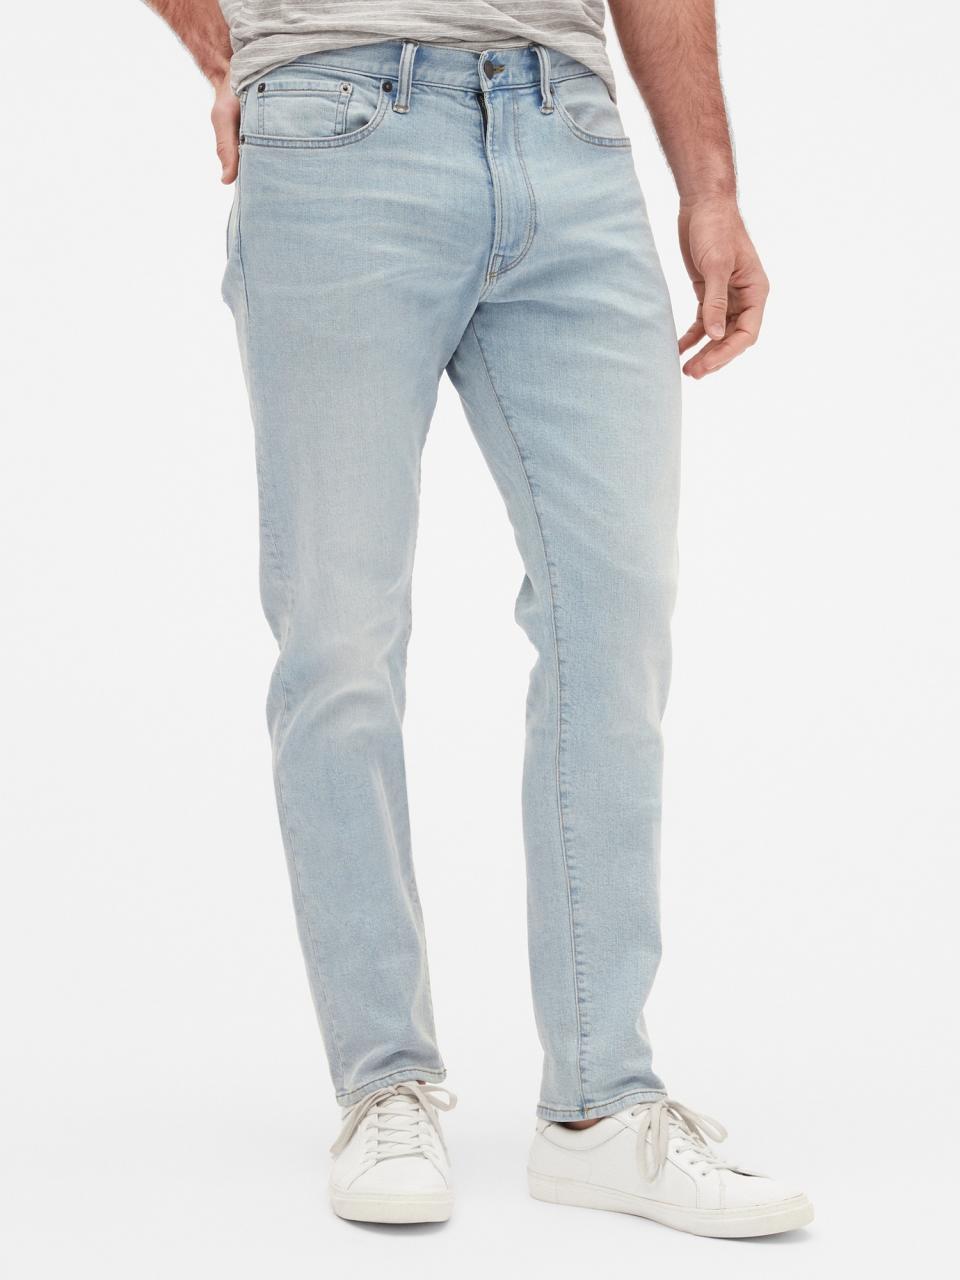 mens light wash jeans, Gap Athletic Taper GapFlex Jeans